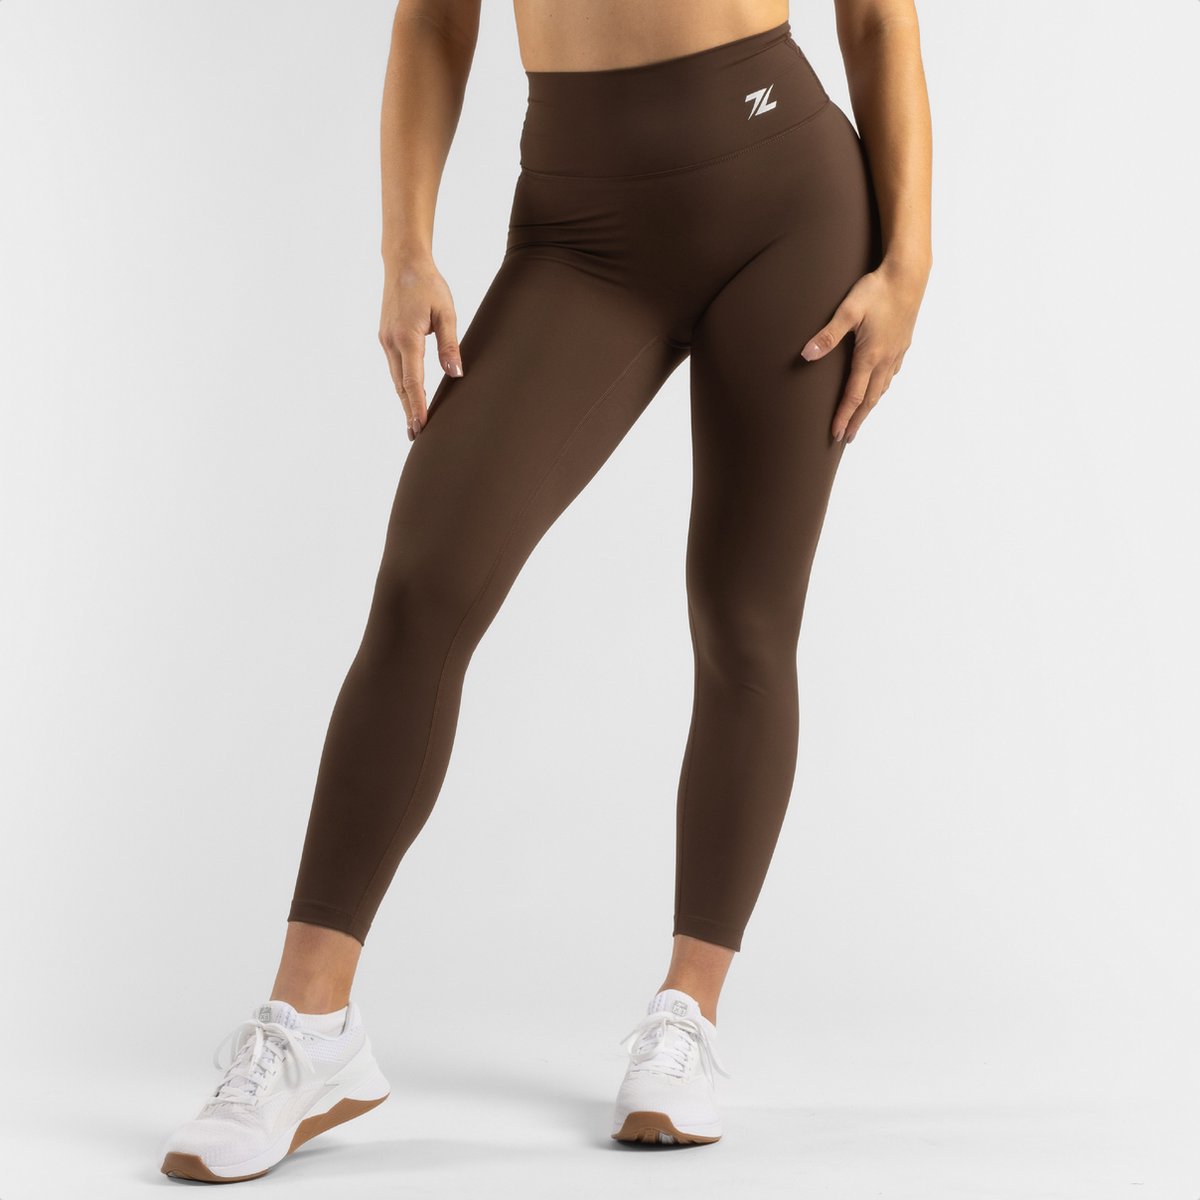 ZEUZ Sport Legging Dames High Waist - Sportkleding & Sportlegging Squat Proof - Fitness & Crossfit - Hardloopbroek, Yoga Broek - 62% Recycled Nylon & 38% Elastaan - Bruin - Maat XS